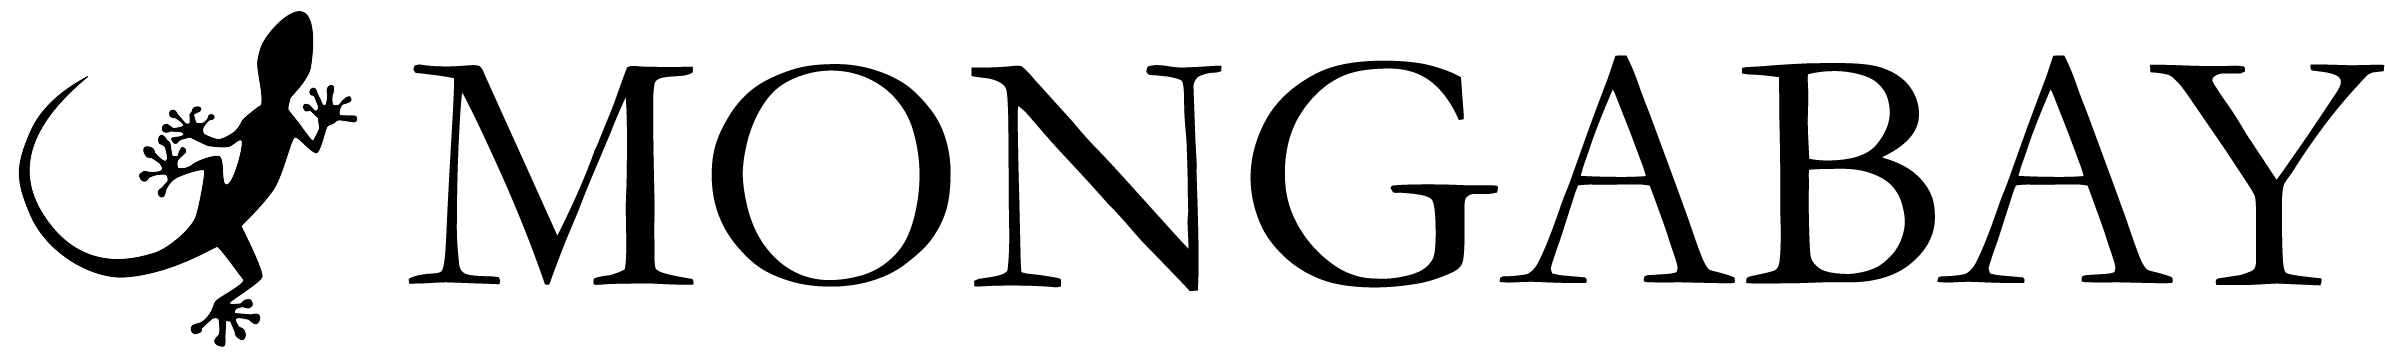 Mongabay black PNG logo without the tagline on a transparent background